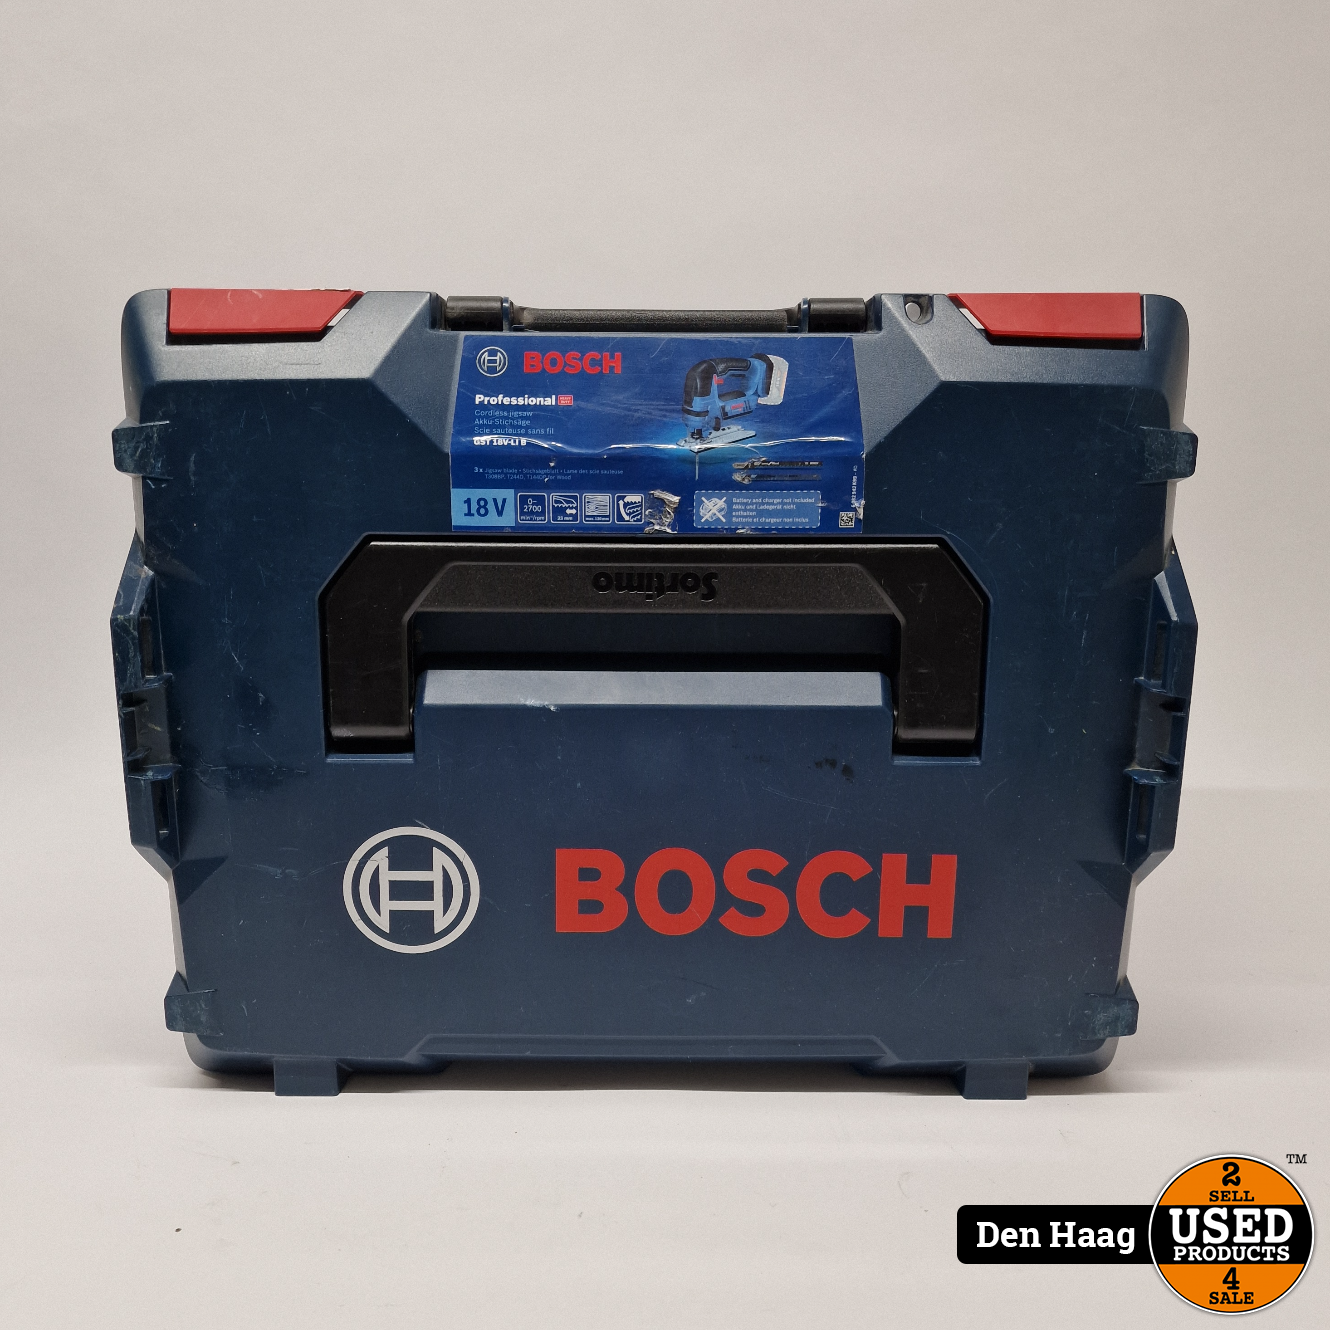 Robijn Turbulentie Shetland Bosch GST 18 V-LI B Accu Decoupeerzaag In L-Boxx | Nette staat - Used  Products Den Haag